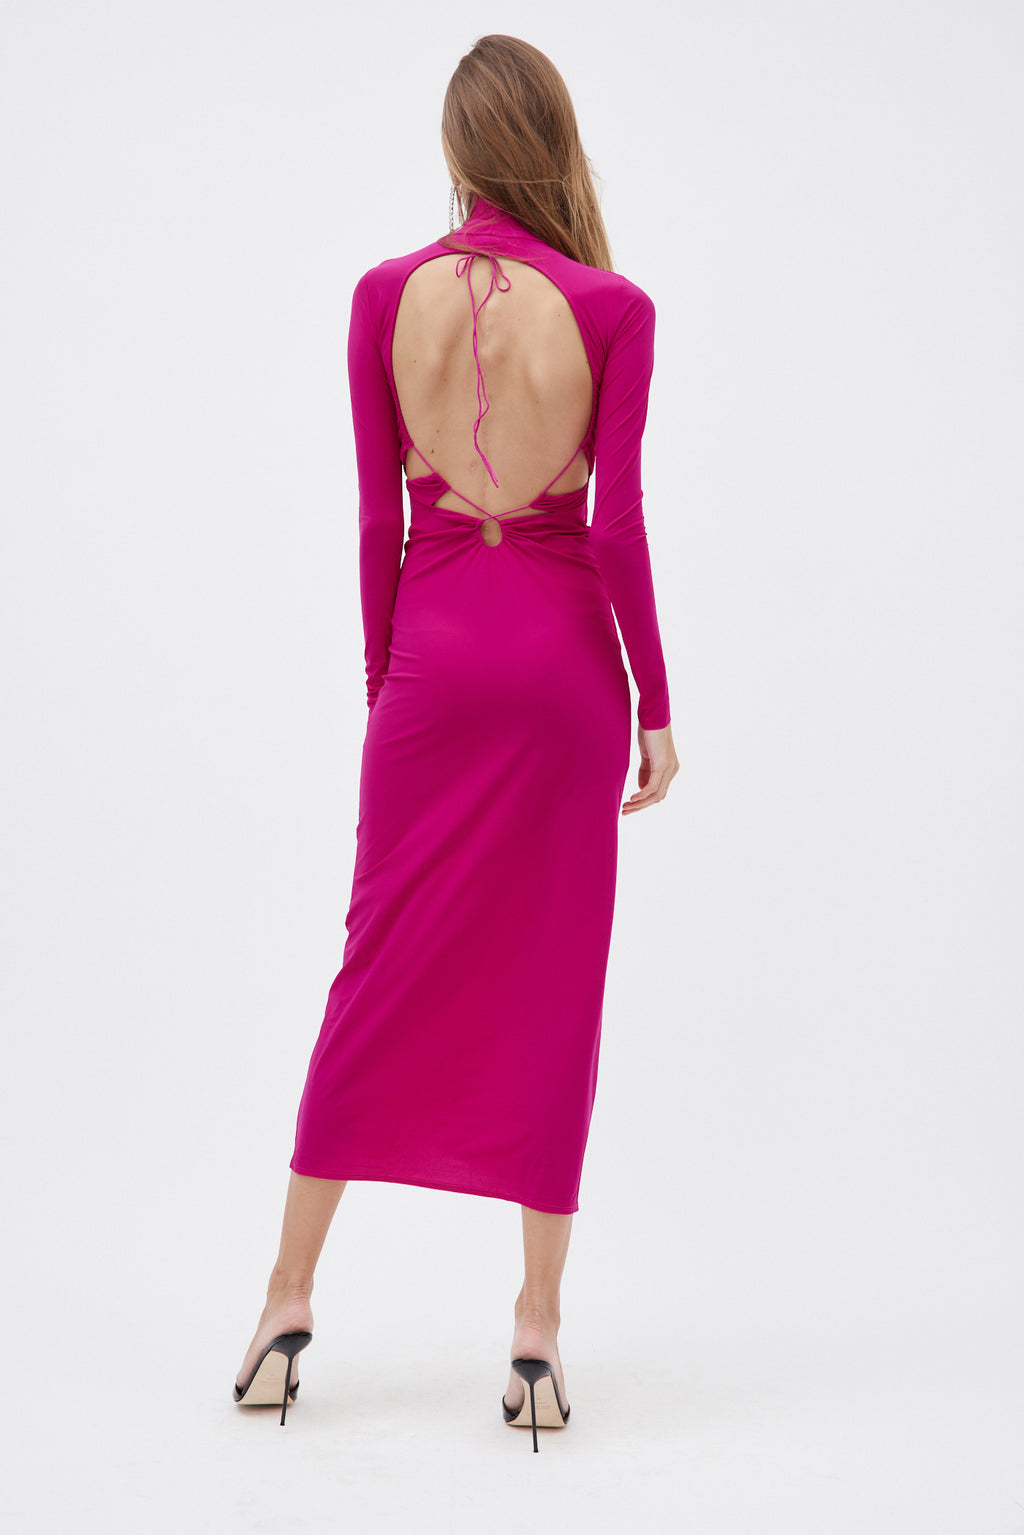 Jenna Purple Pink Dress